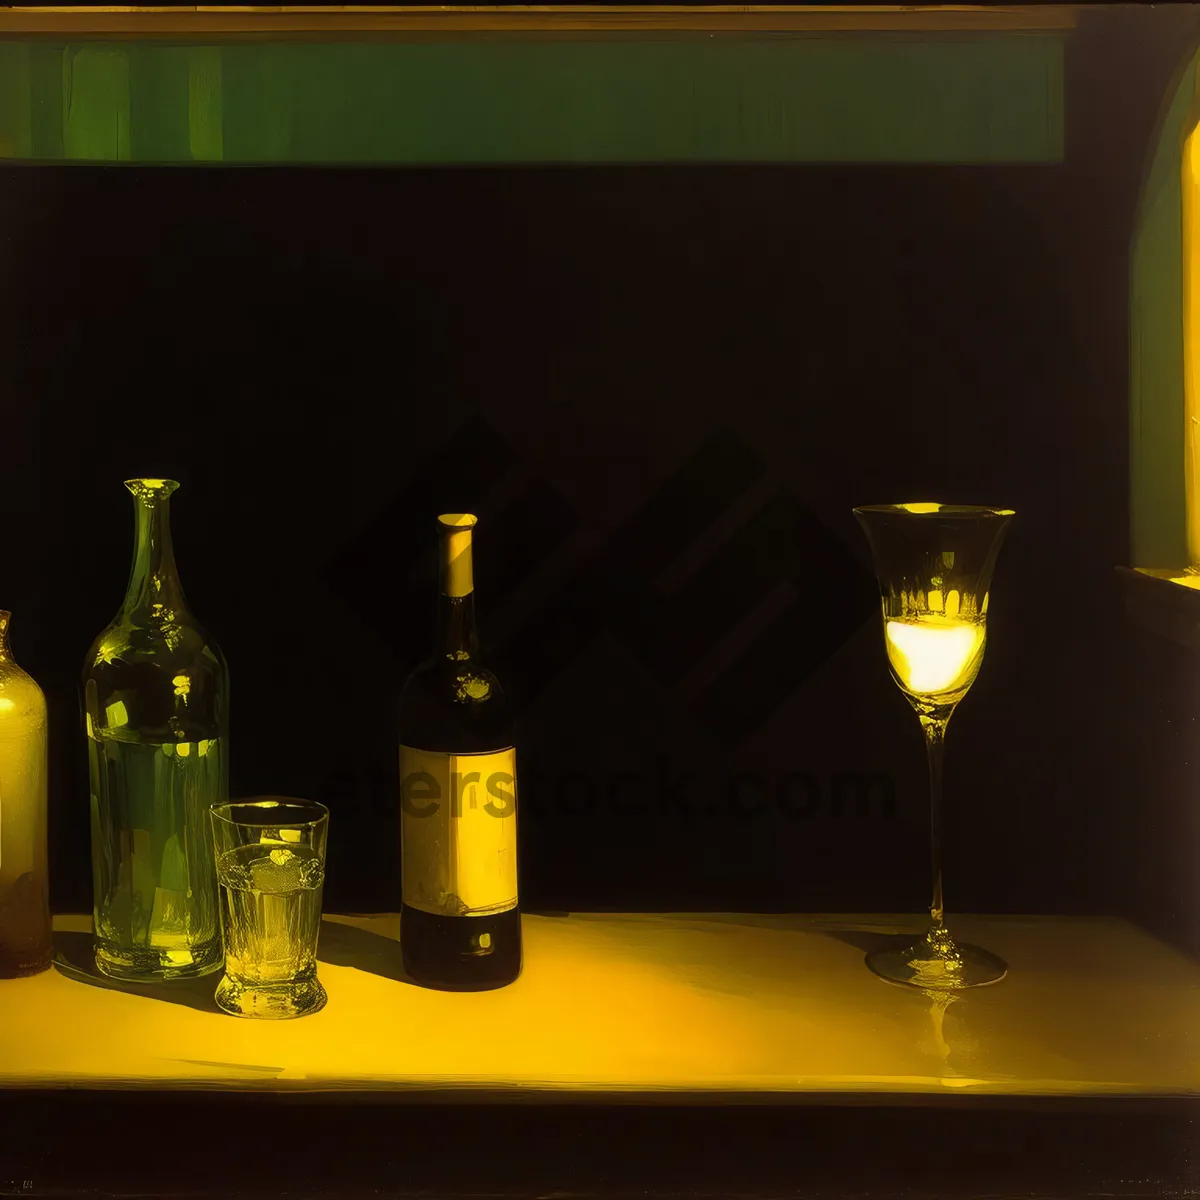 Picture of Sparkling Celebration: Elegant Wineglass with Golden Drink